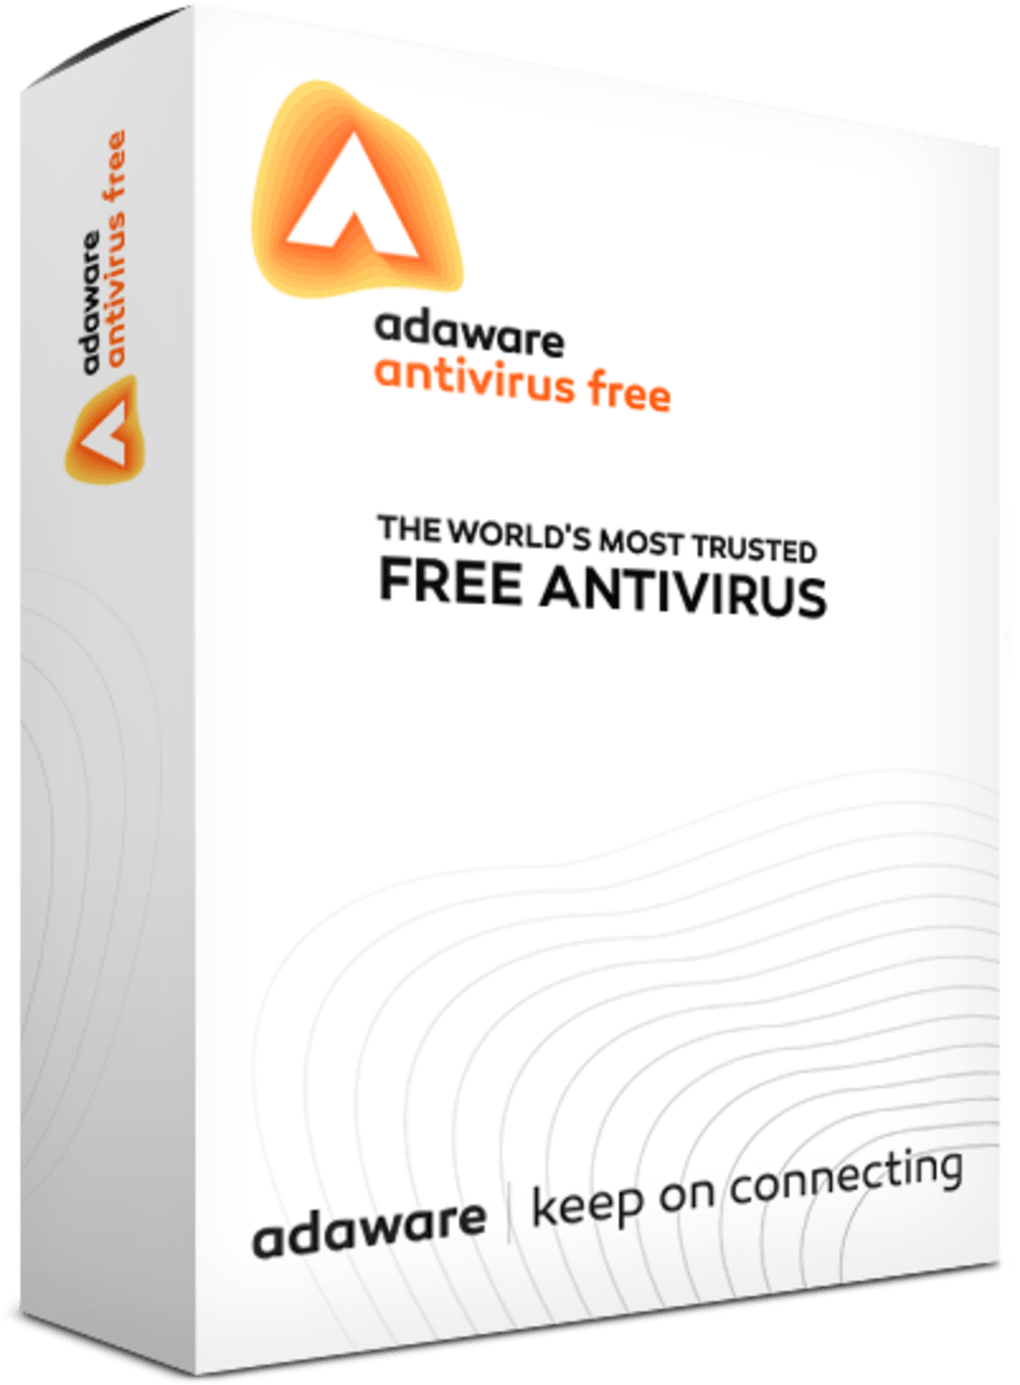 ad aware free antivirus software download